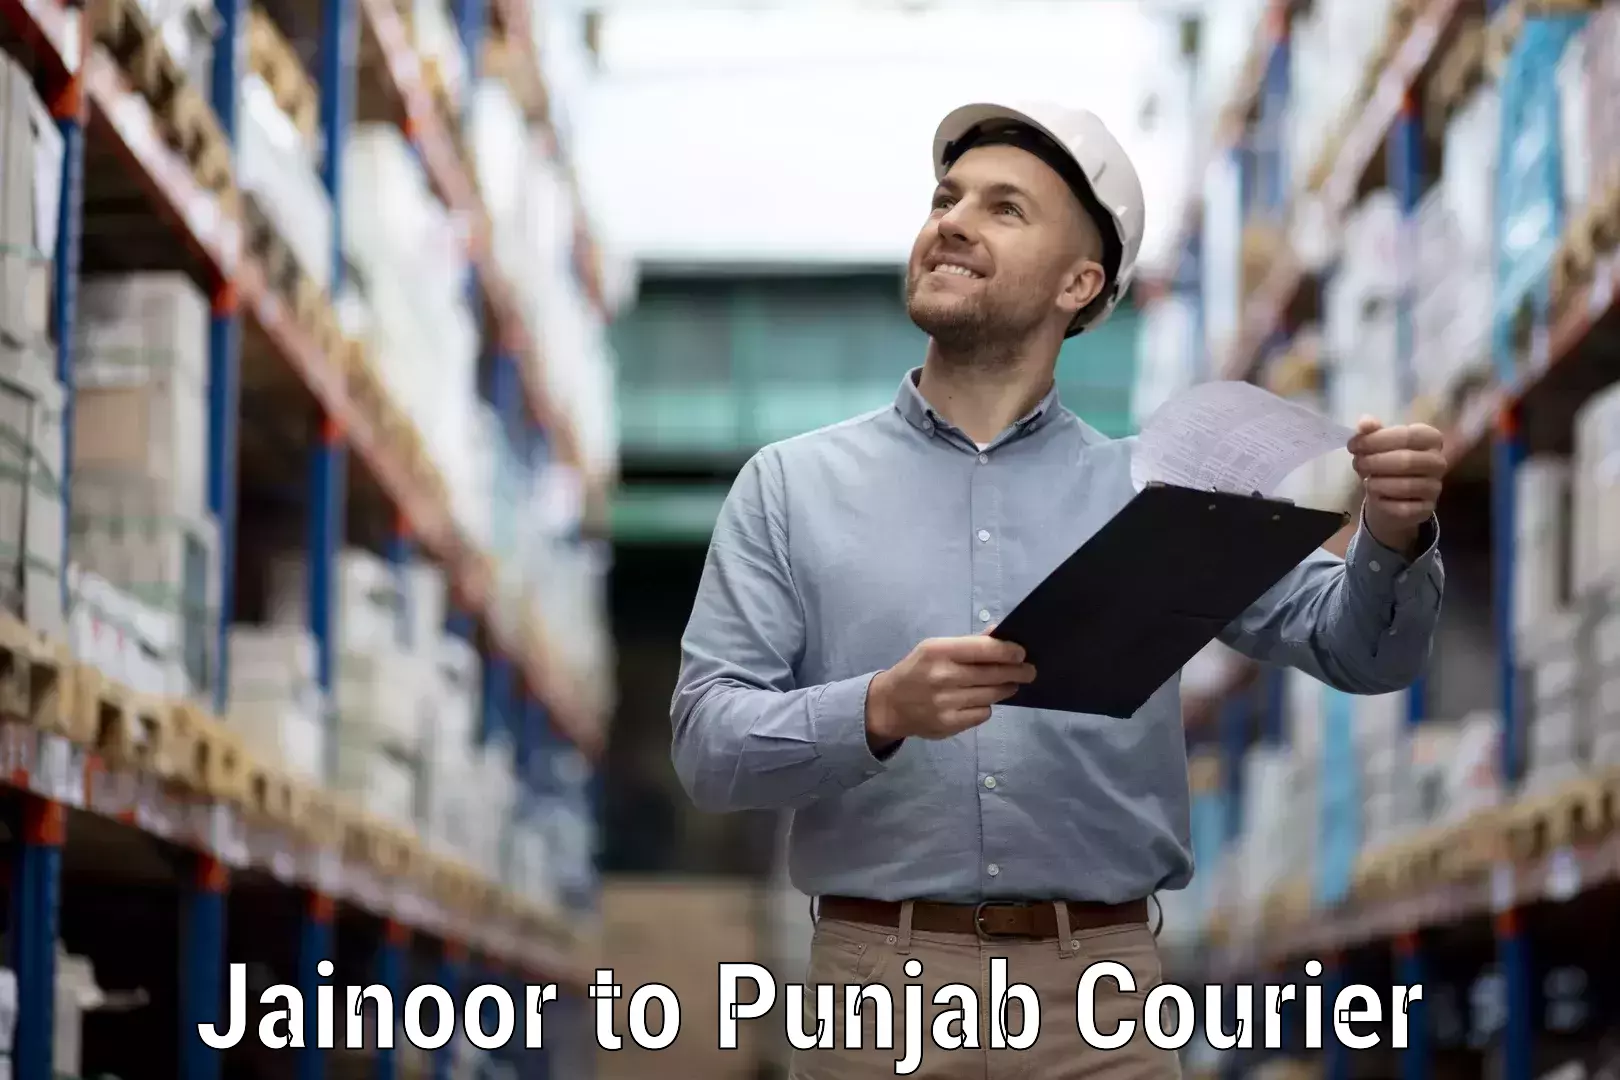 Round-the-clock parcel delivery Jainoor to Fatehgarh Sahib